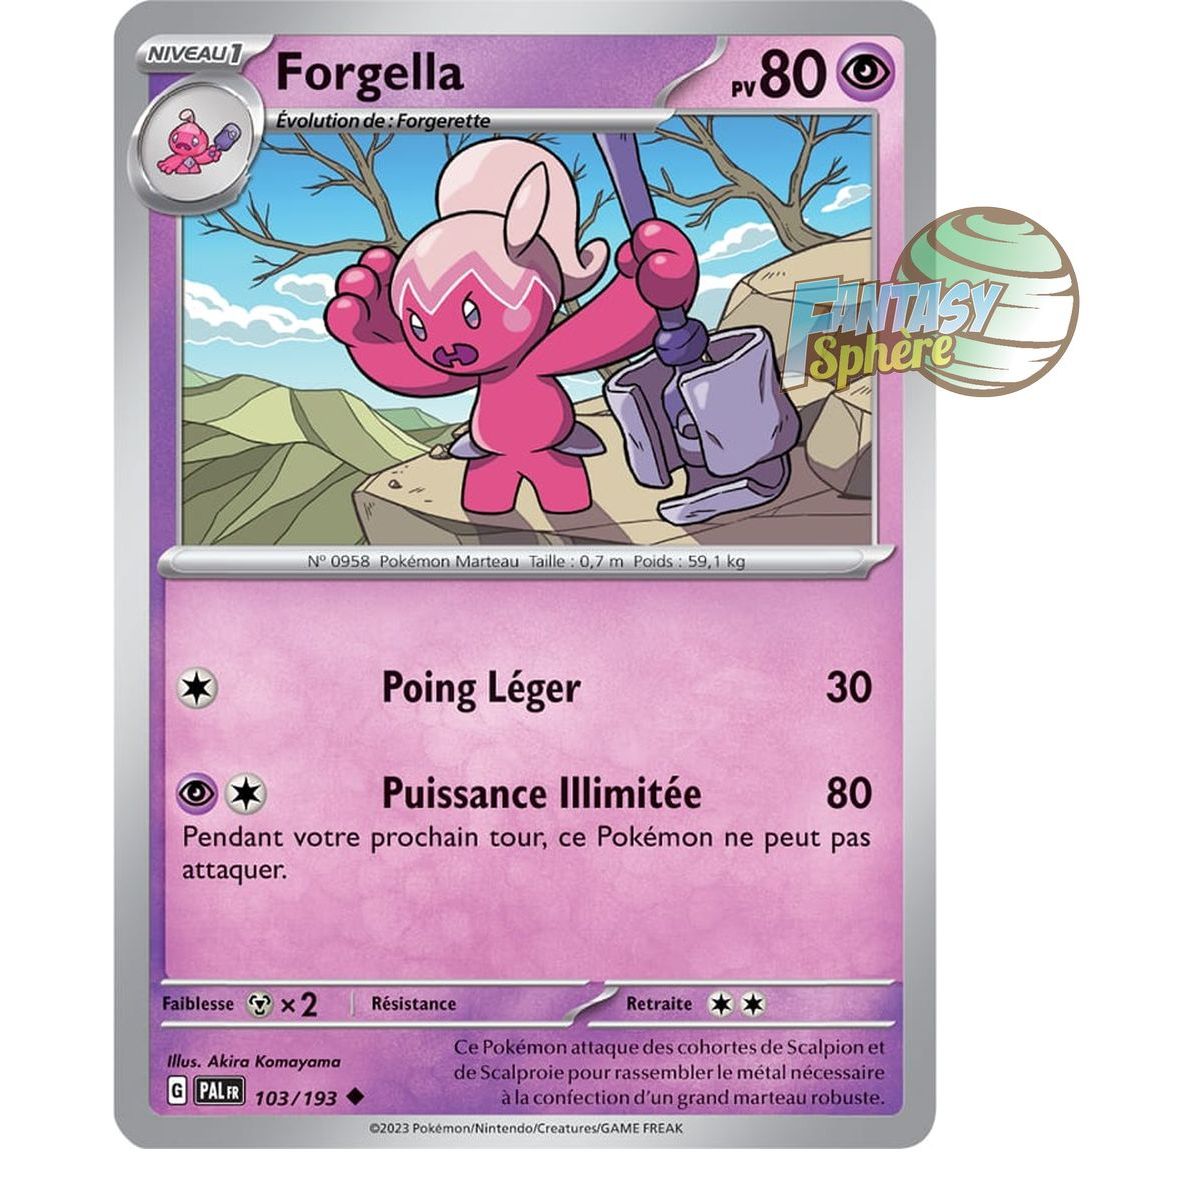 Forgella - Uncommon 103/193 - Scarlet and Violet Evolution in Paldea